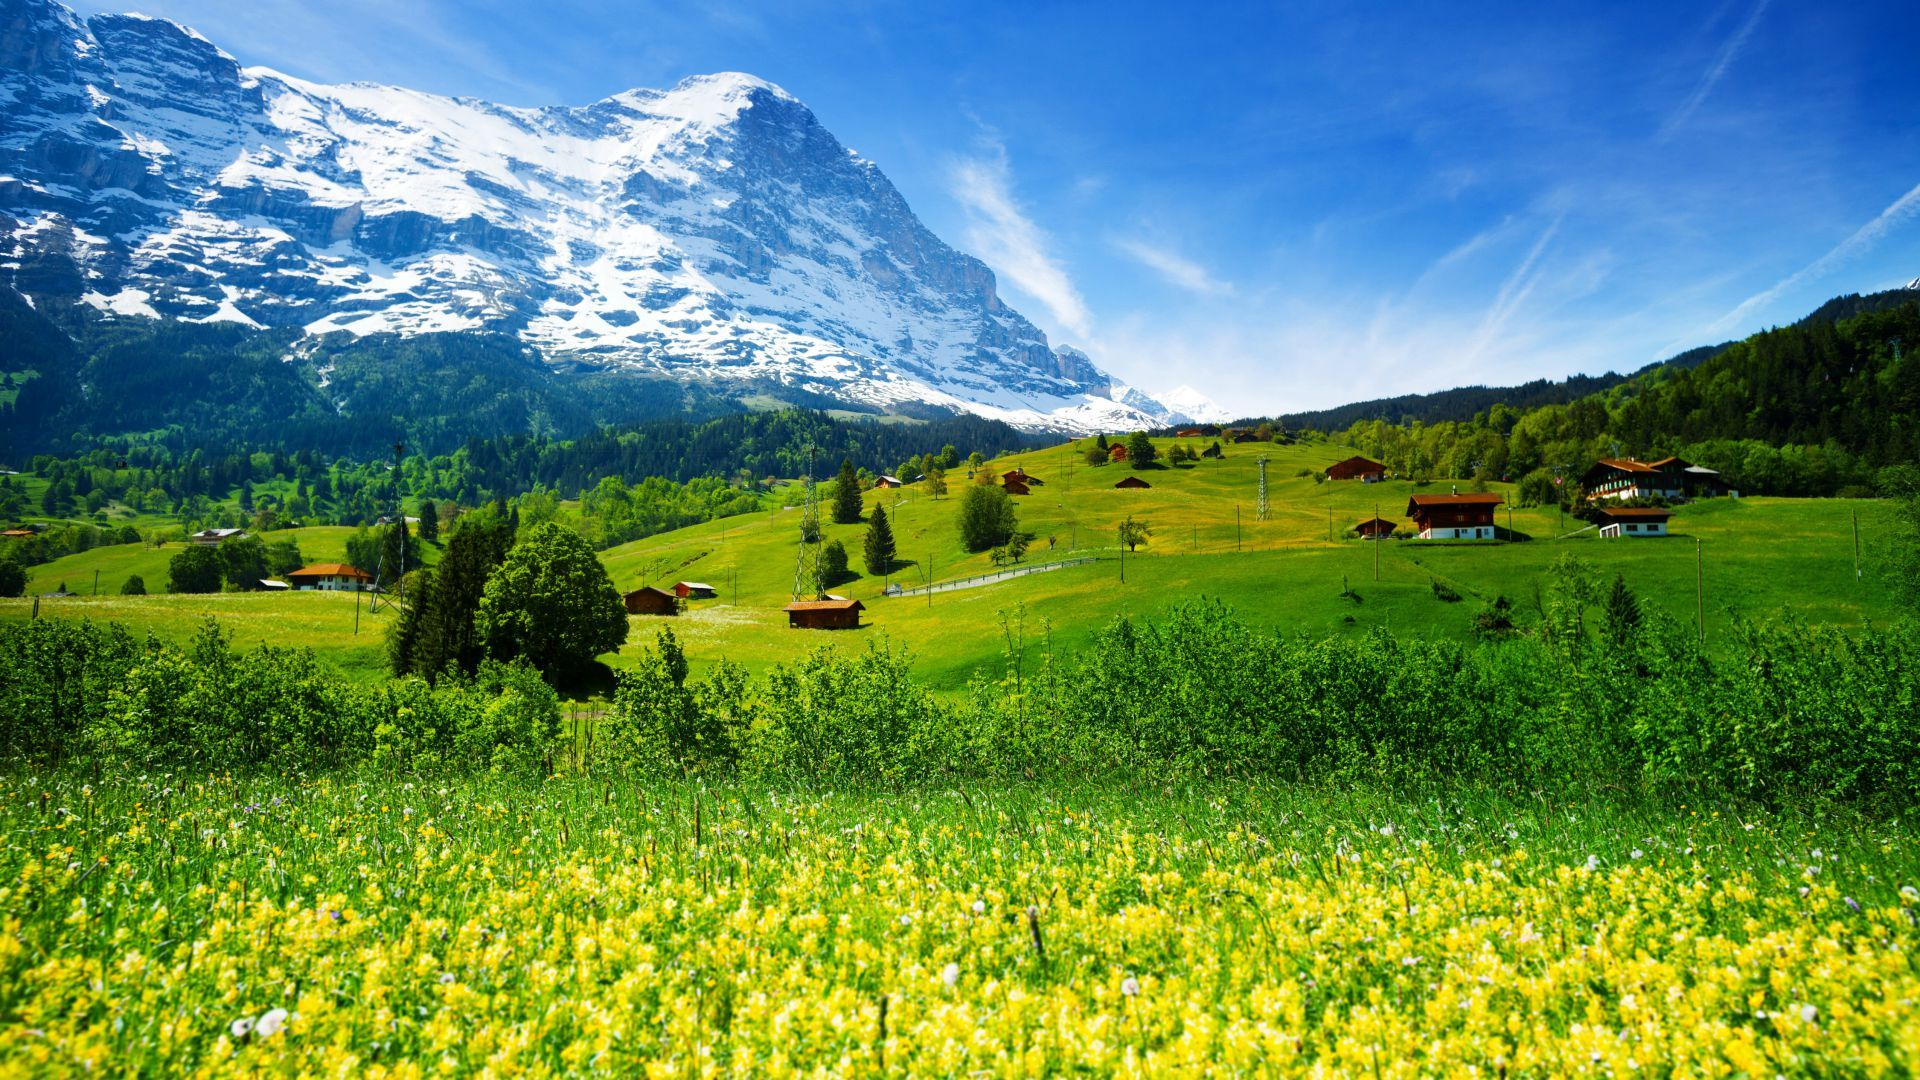 1920x1080 Wallpaper Switzerland, 5k, 4k wallpaper, mountains, meadows, wildflowers, Nature #5296 | Landscape wallpaper, Green landscape, Mountain landscape